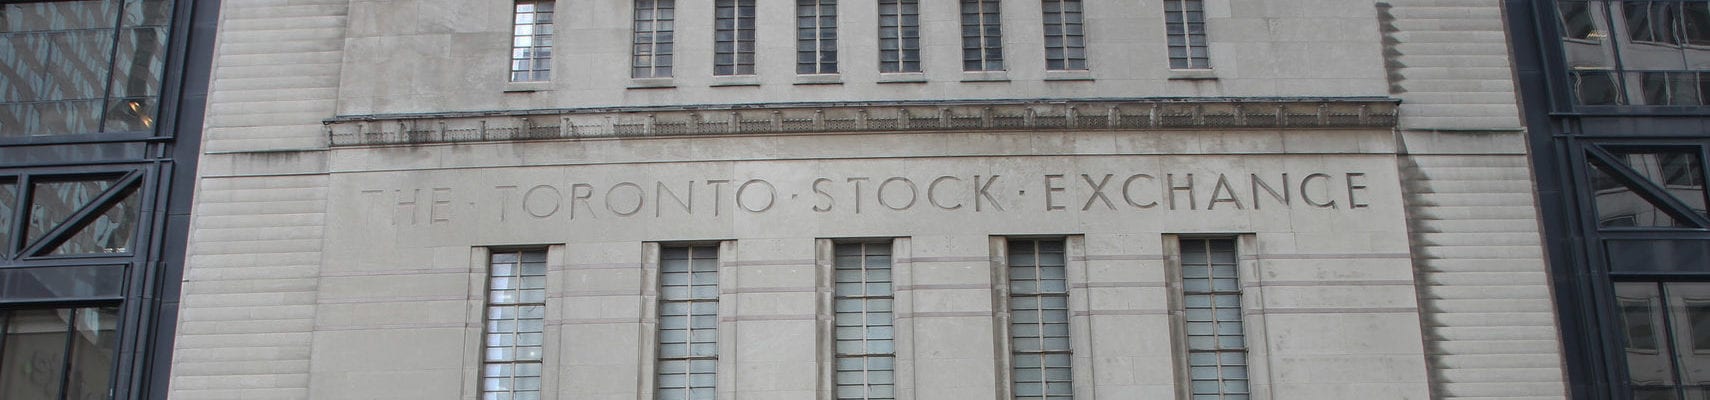 The Toronto Stock Exchange in Toronto, Ontario, Canada.